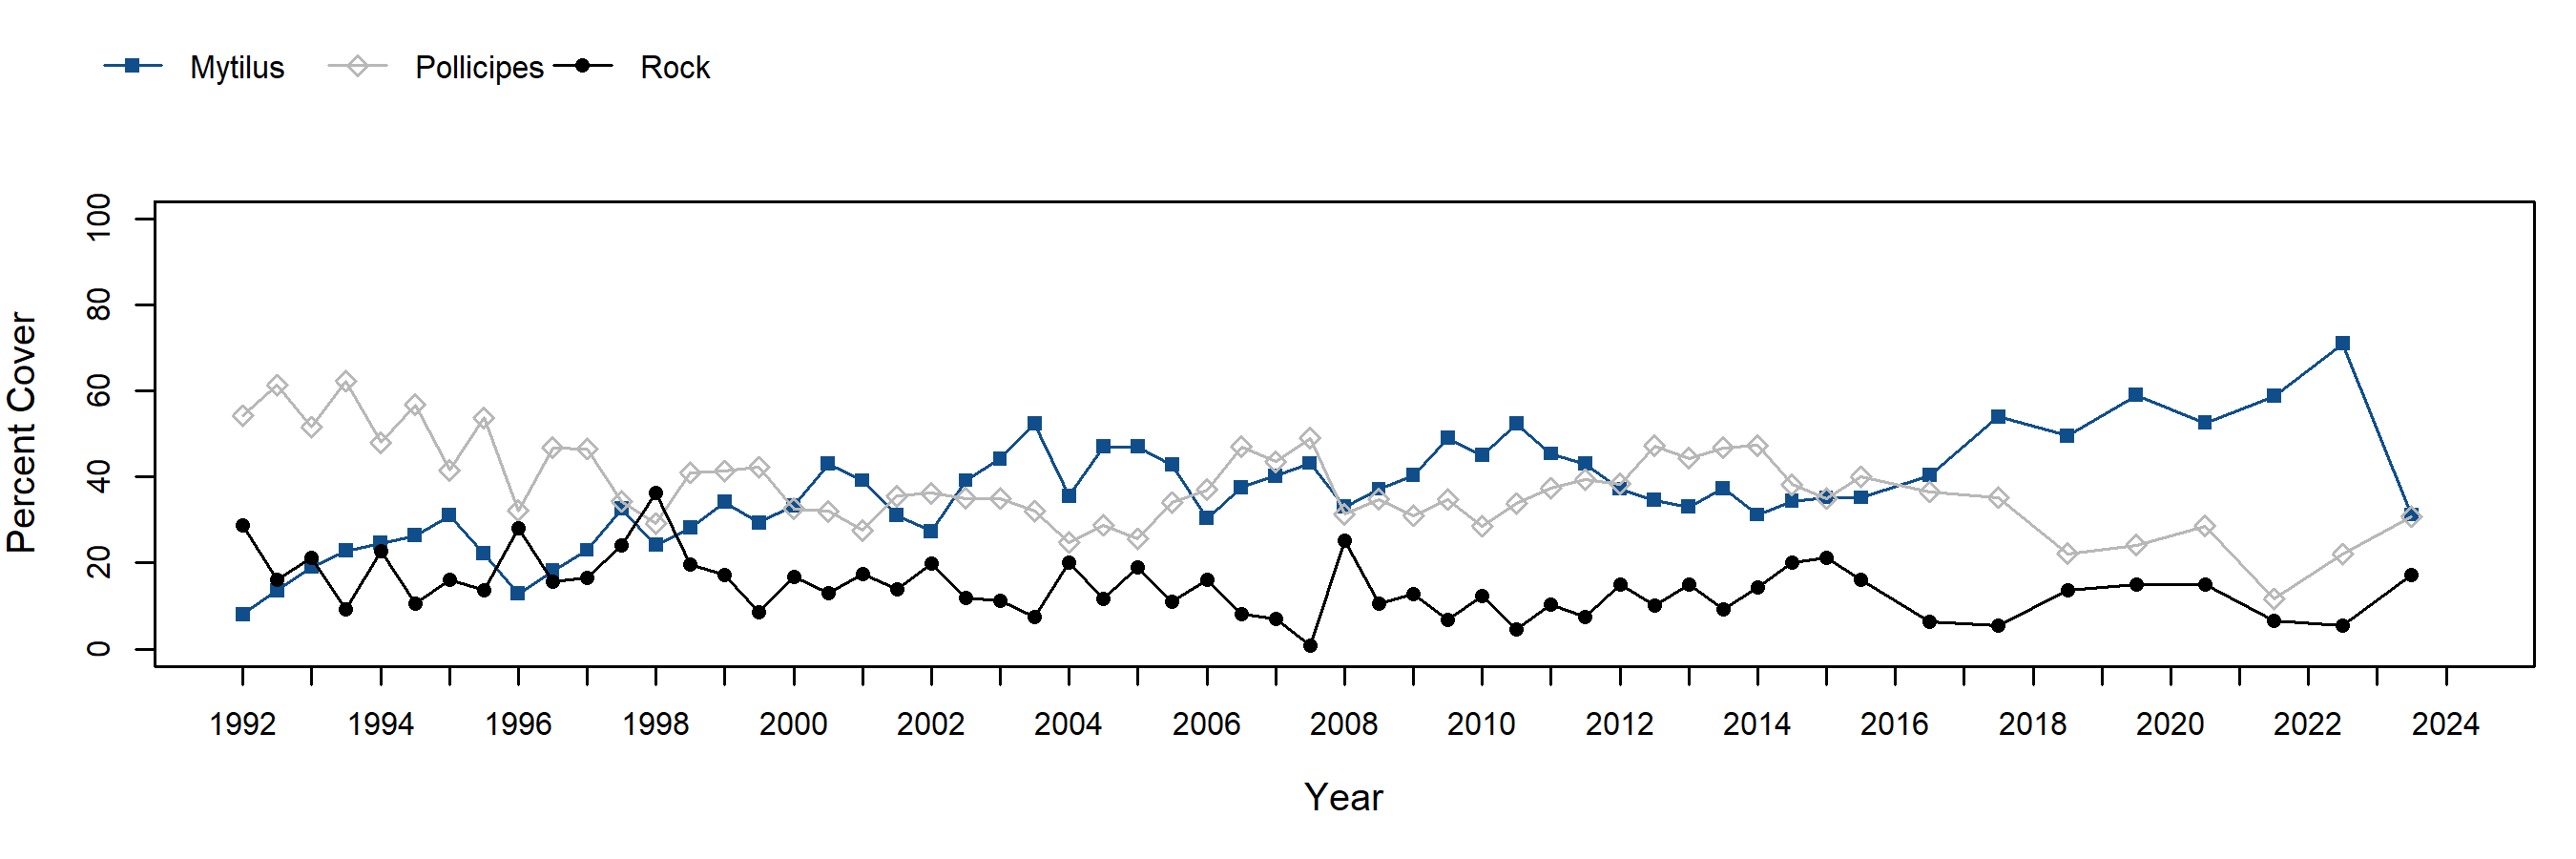 Carpinteria Pollicipes trend plot